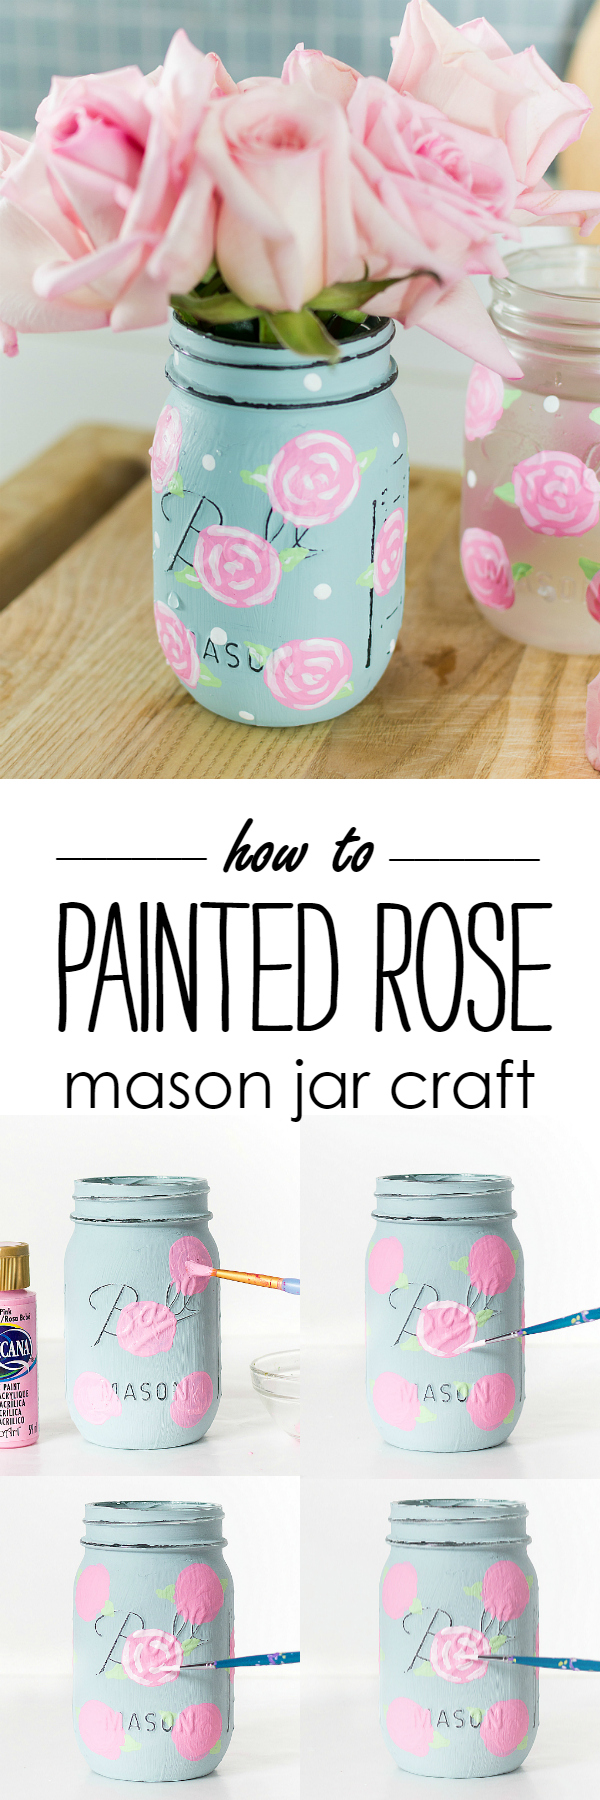 Painted Rose Mason Jar Craft - How To Paint A Rose - Mason Jar Craft Ideas Spring @itallstartedwithpaint.com